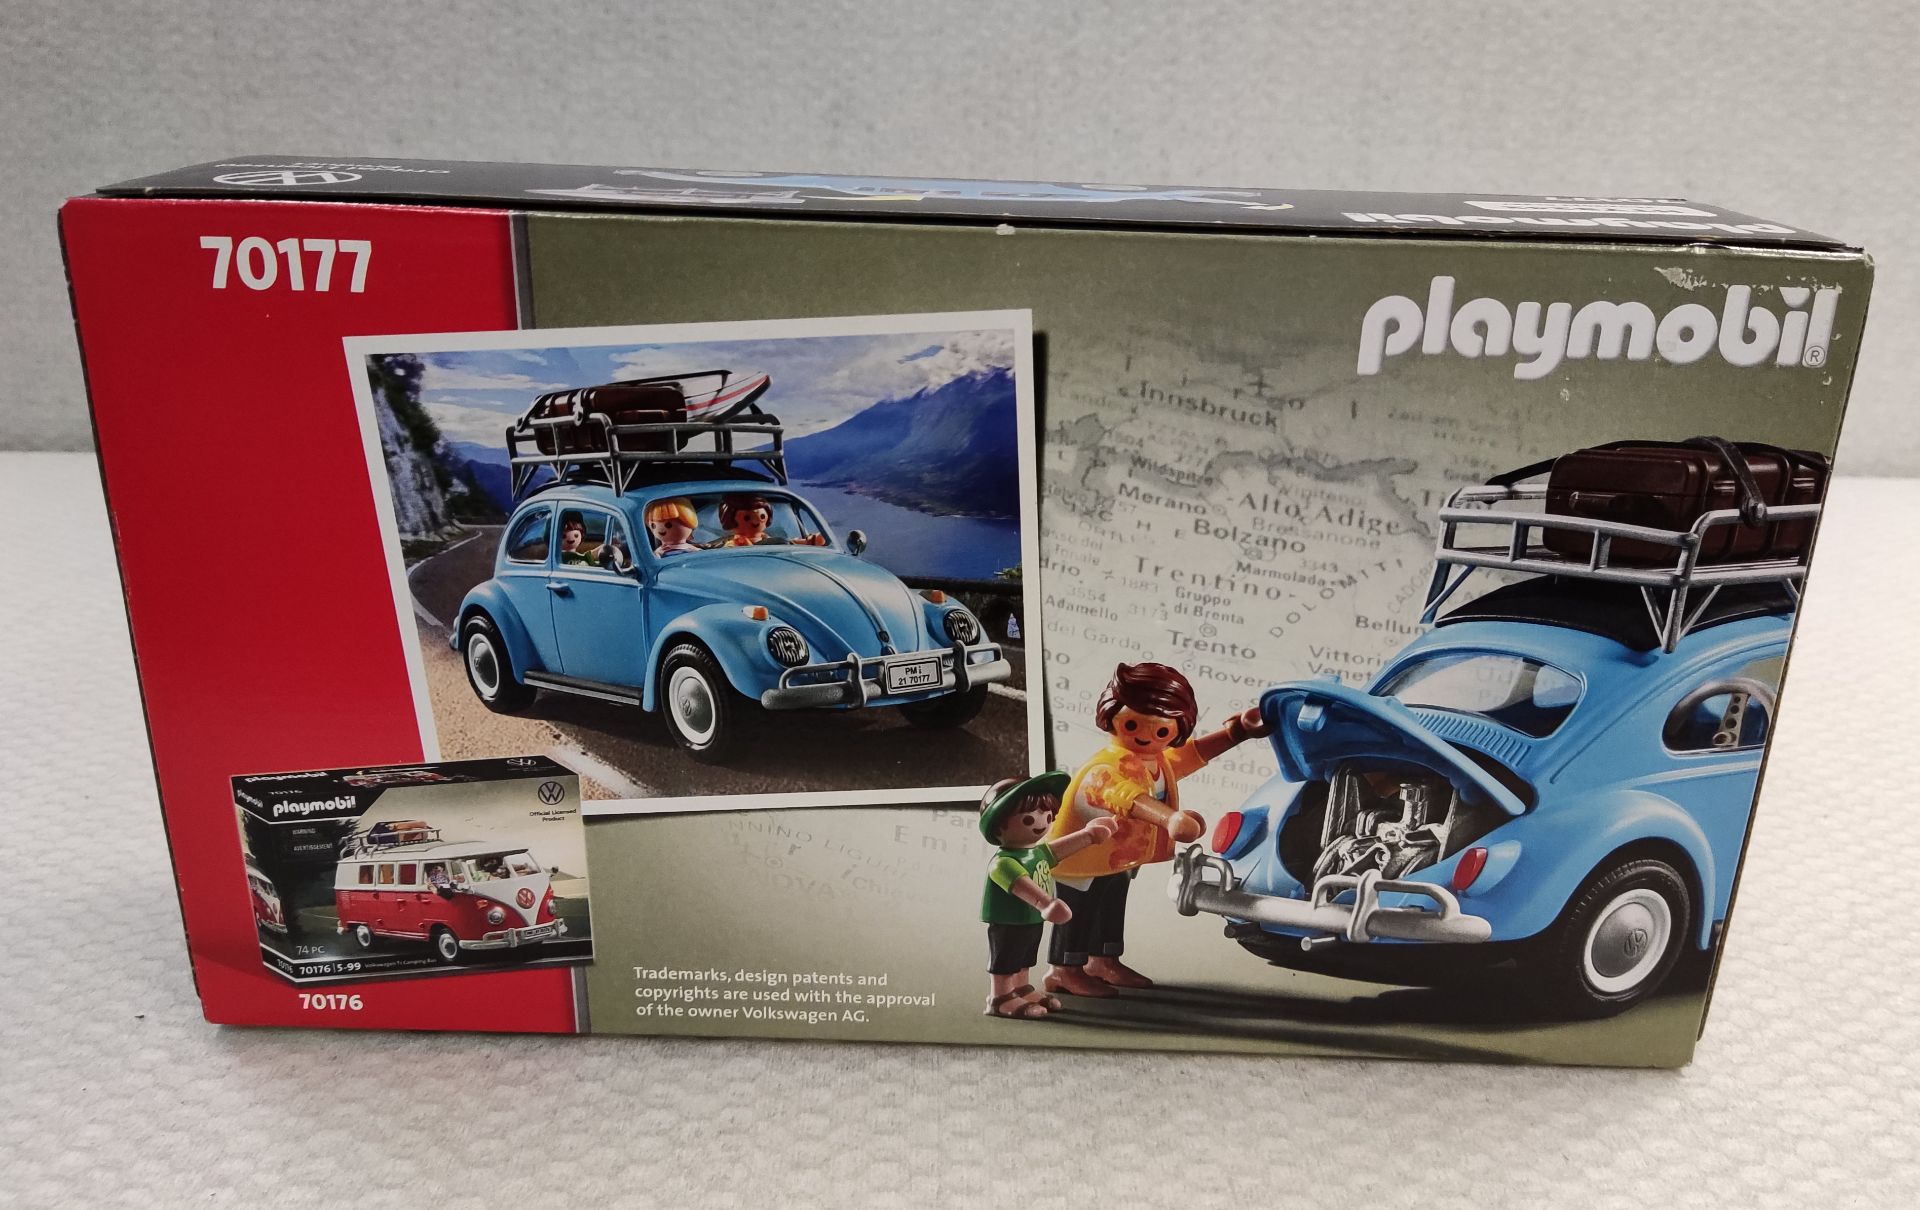 1 x Playmobil Volkswagen Beetle - Model 70177 - New/Boxed - Image 3 of 6